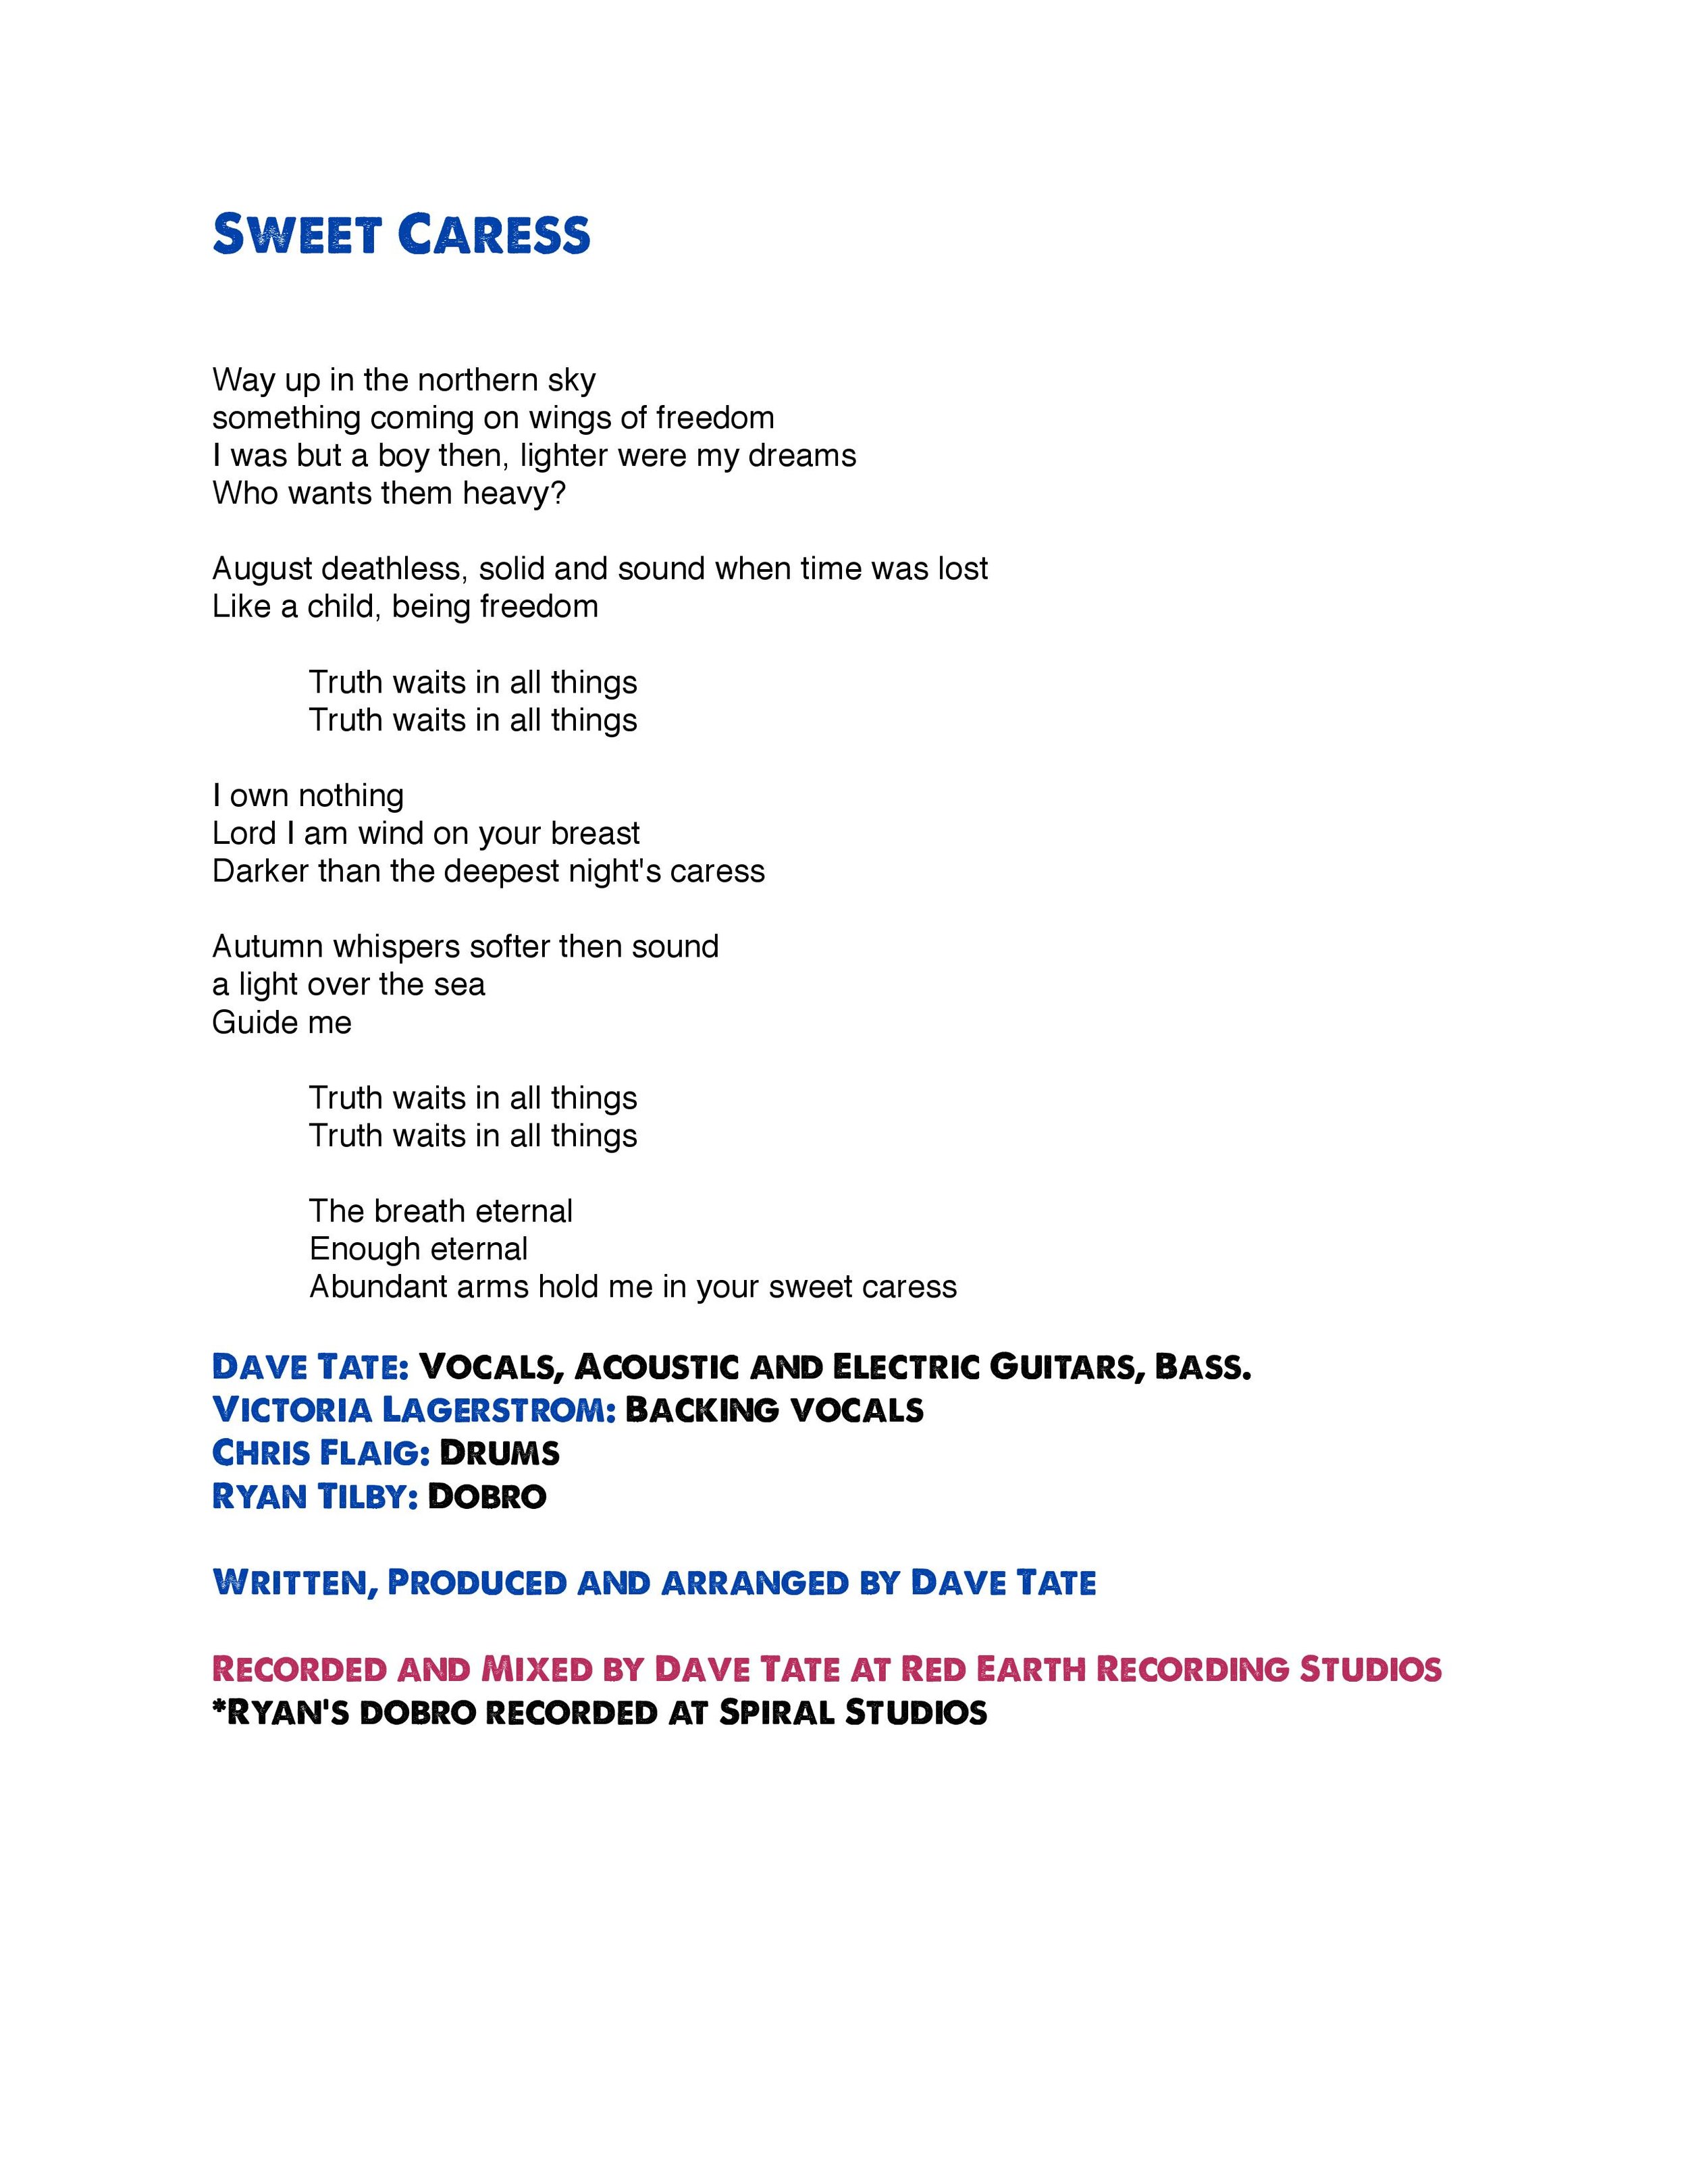 7 Sweet Caress Lyrics-page-001.jpg